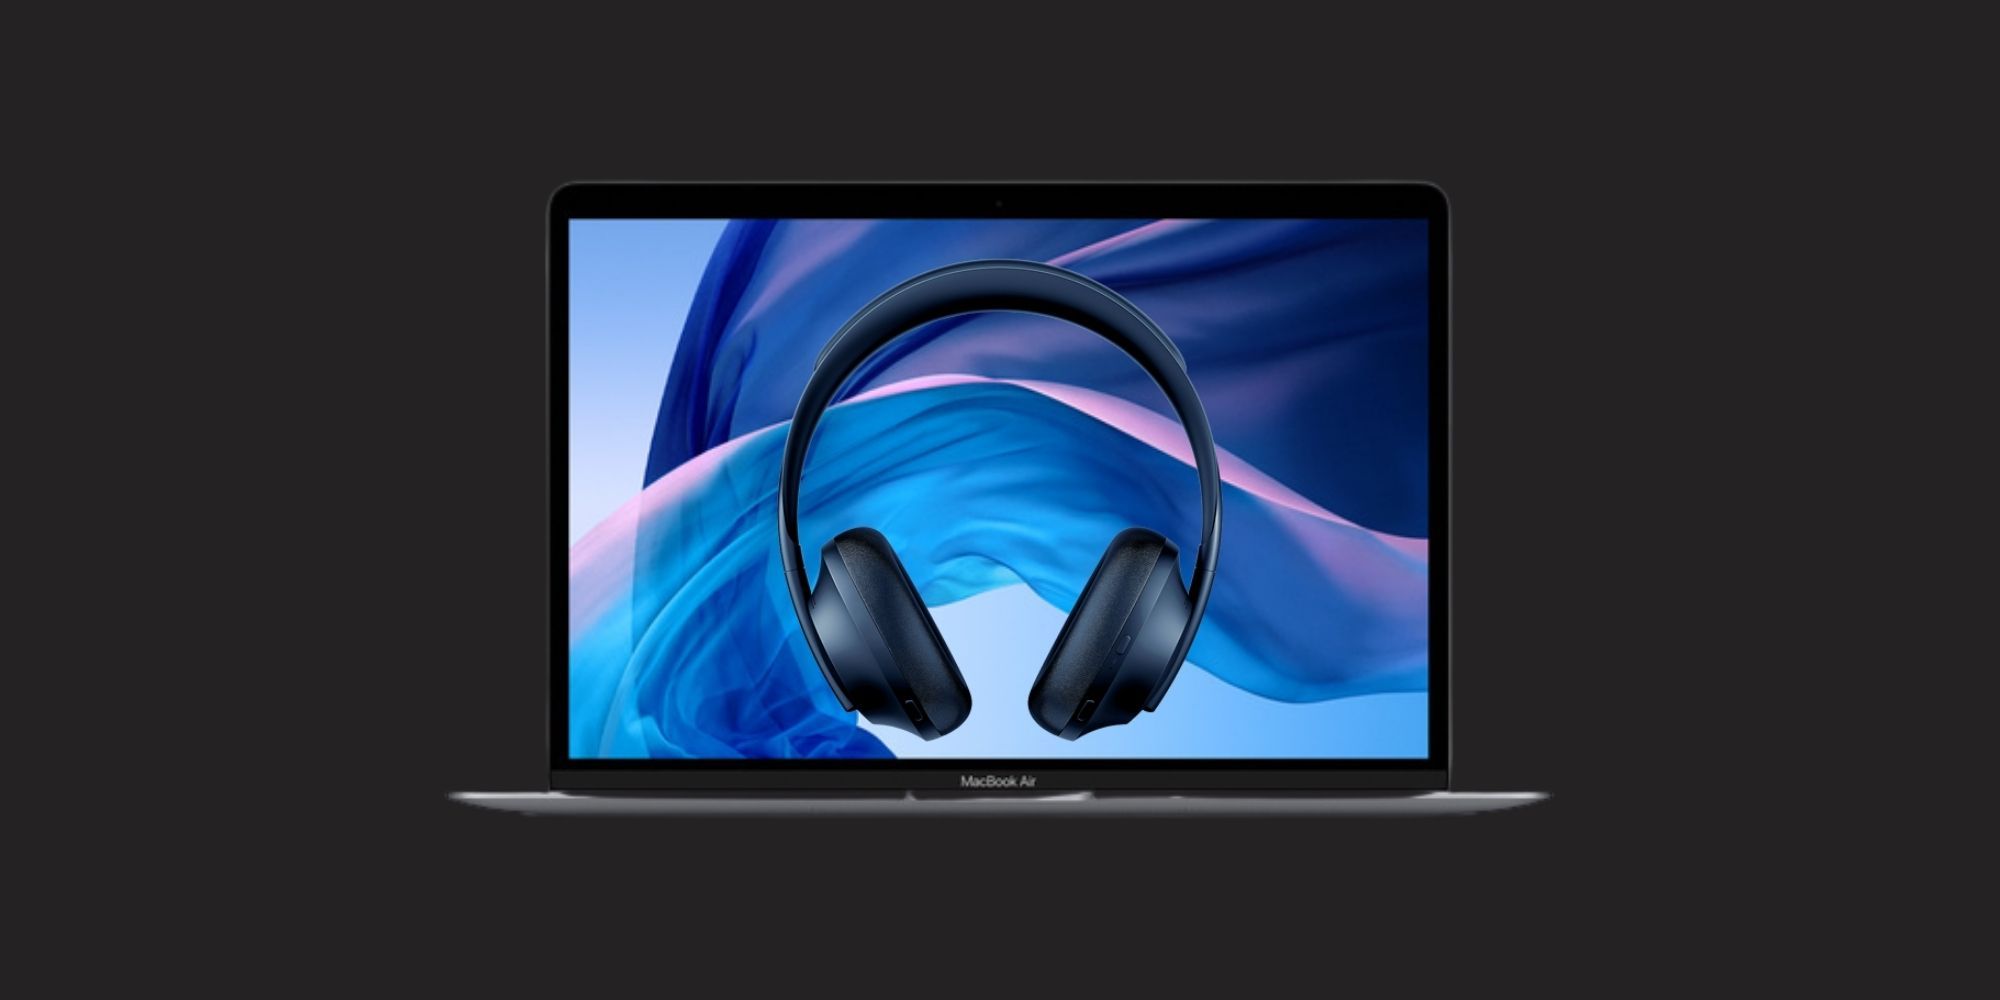 Bier Geruststellen Drijvende kracht How To Connect Bose & Other Bluetooth Headphones To A Mac